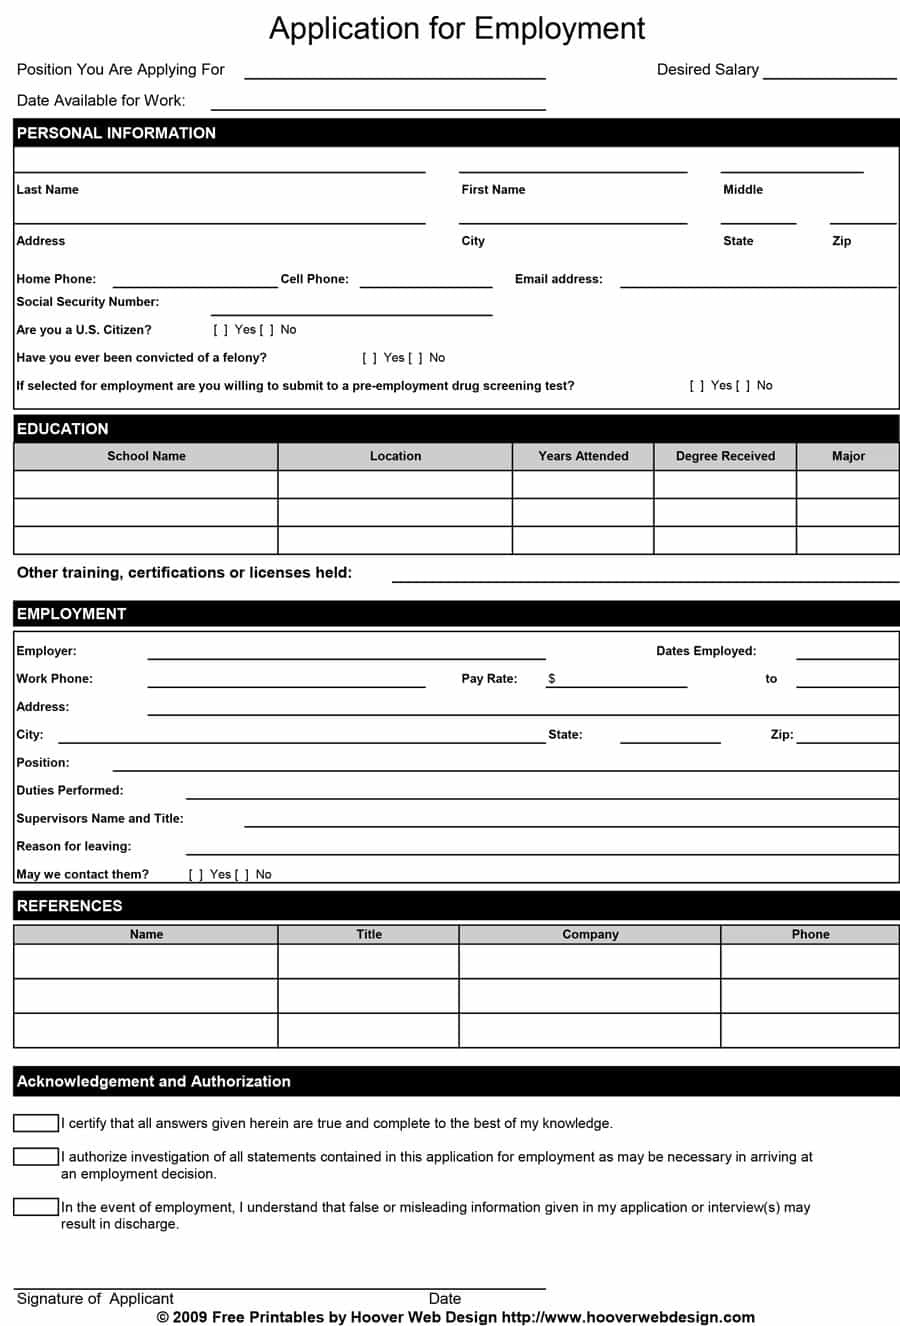 50 Free Employment / Job Application Form Templates [Printable] ᐅ - Free Printable Job Applications Online